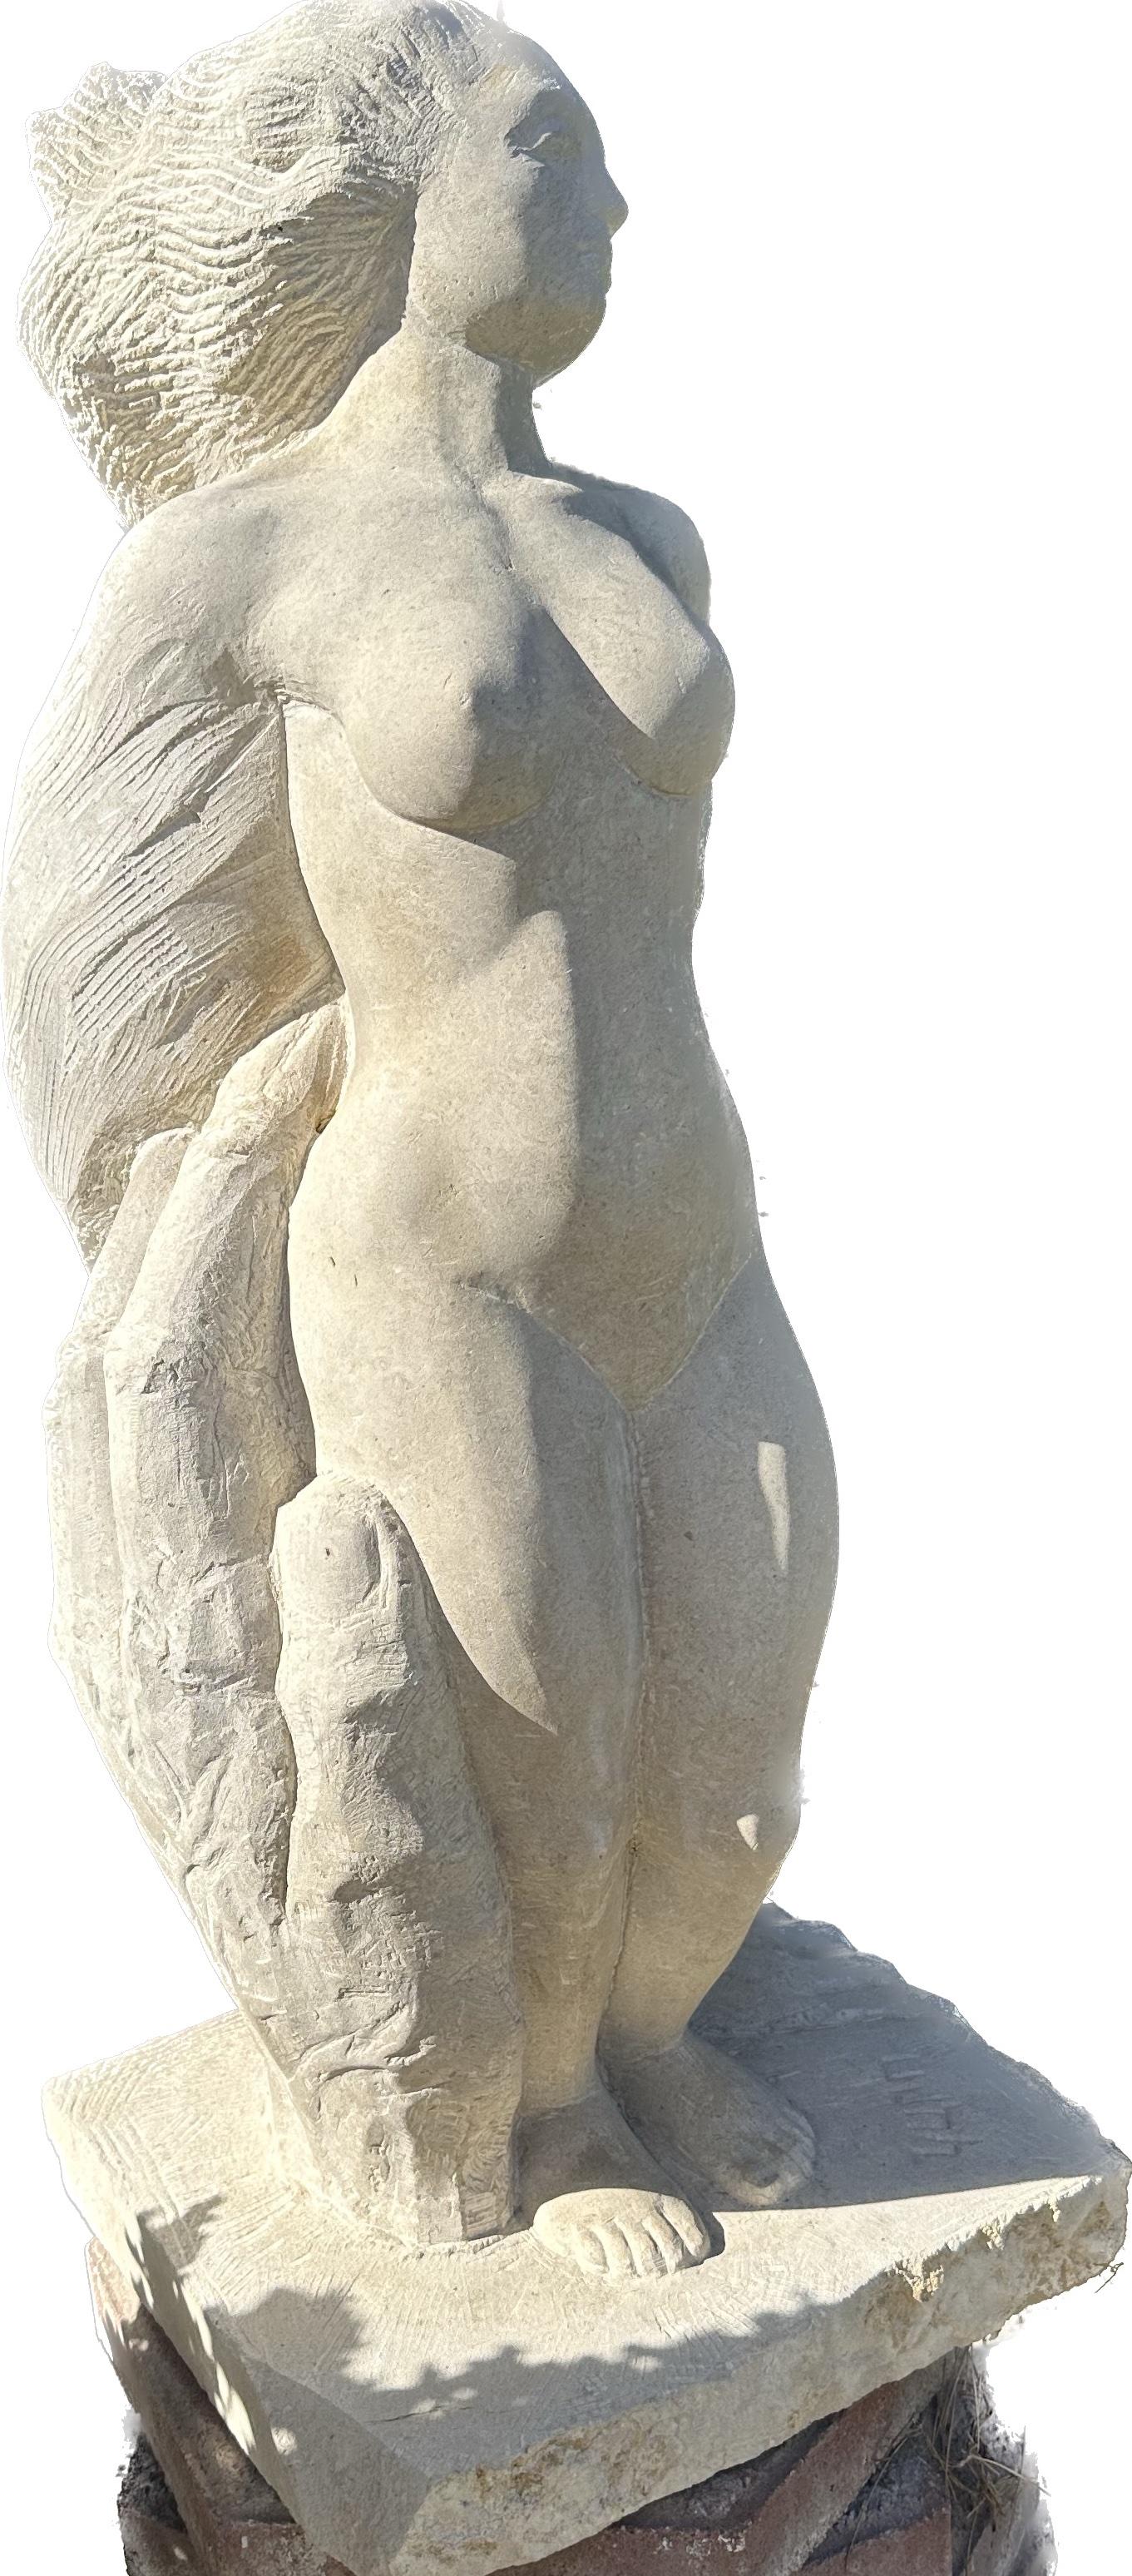 Karapet Balakeseryan  (Garo) Figurative Sculpture - Nude Woman, Sculpture, Stone Handmade by Garo